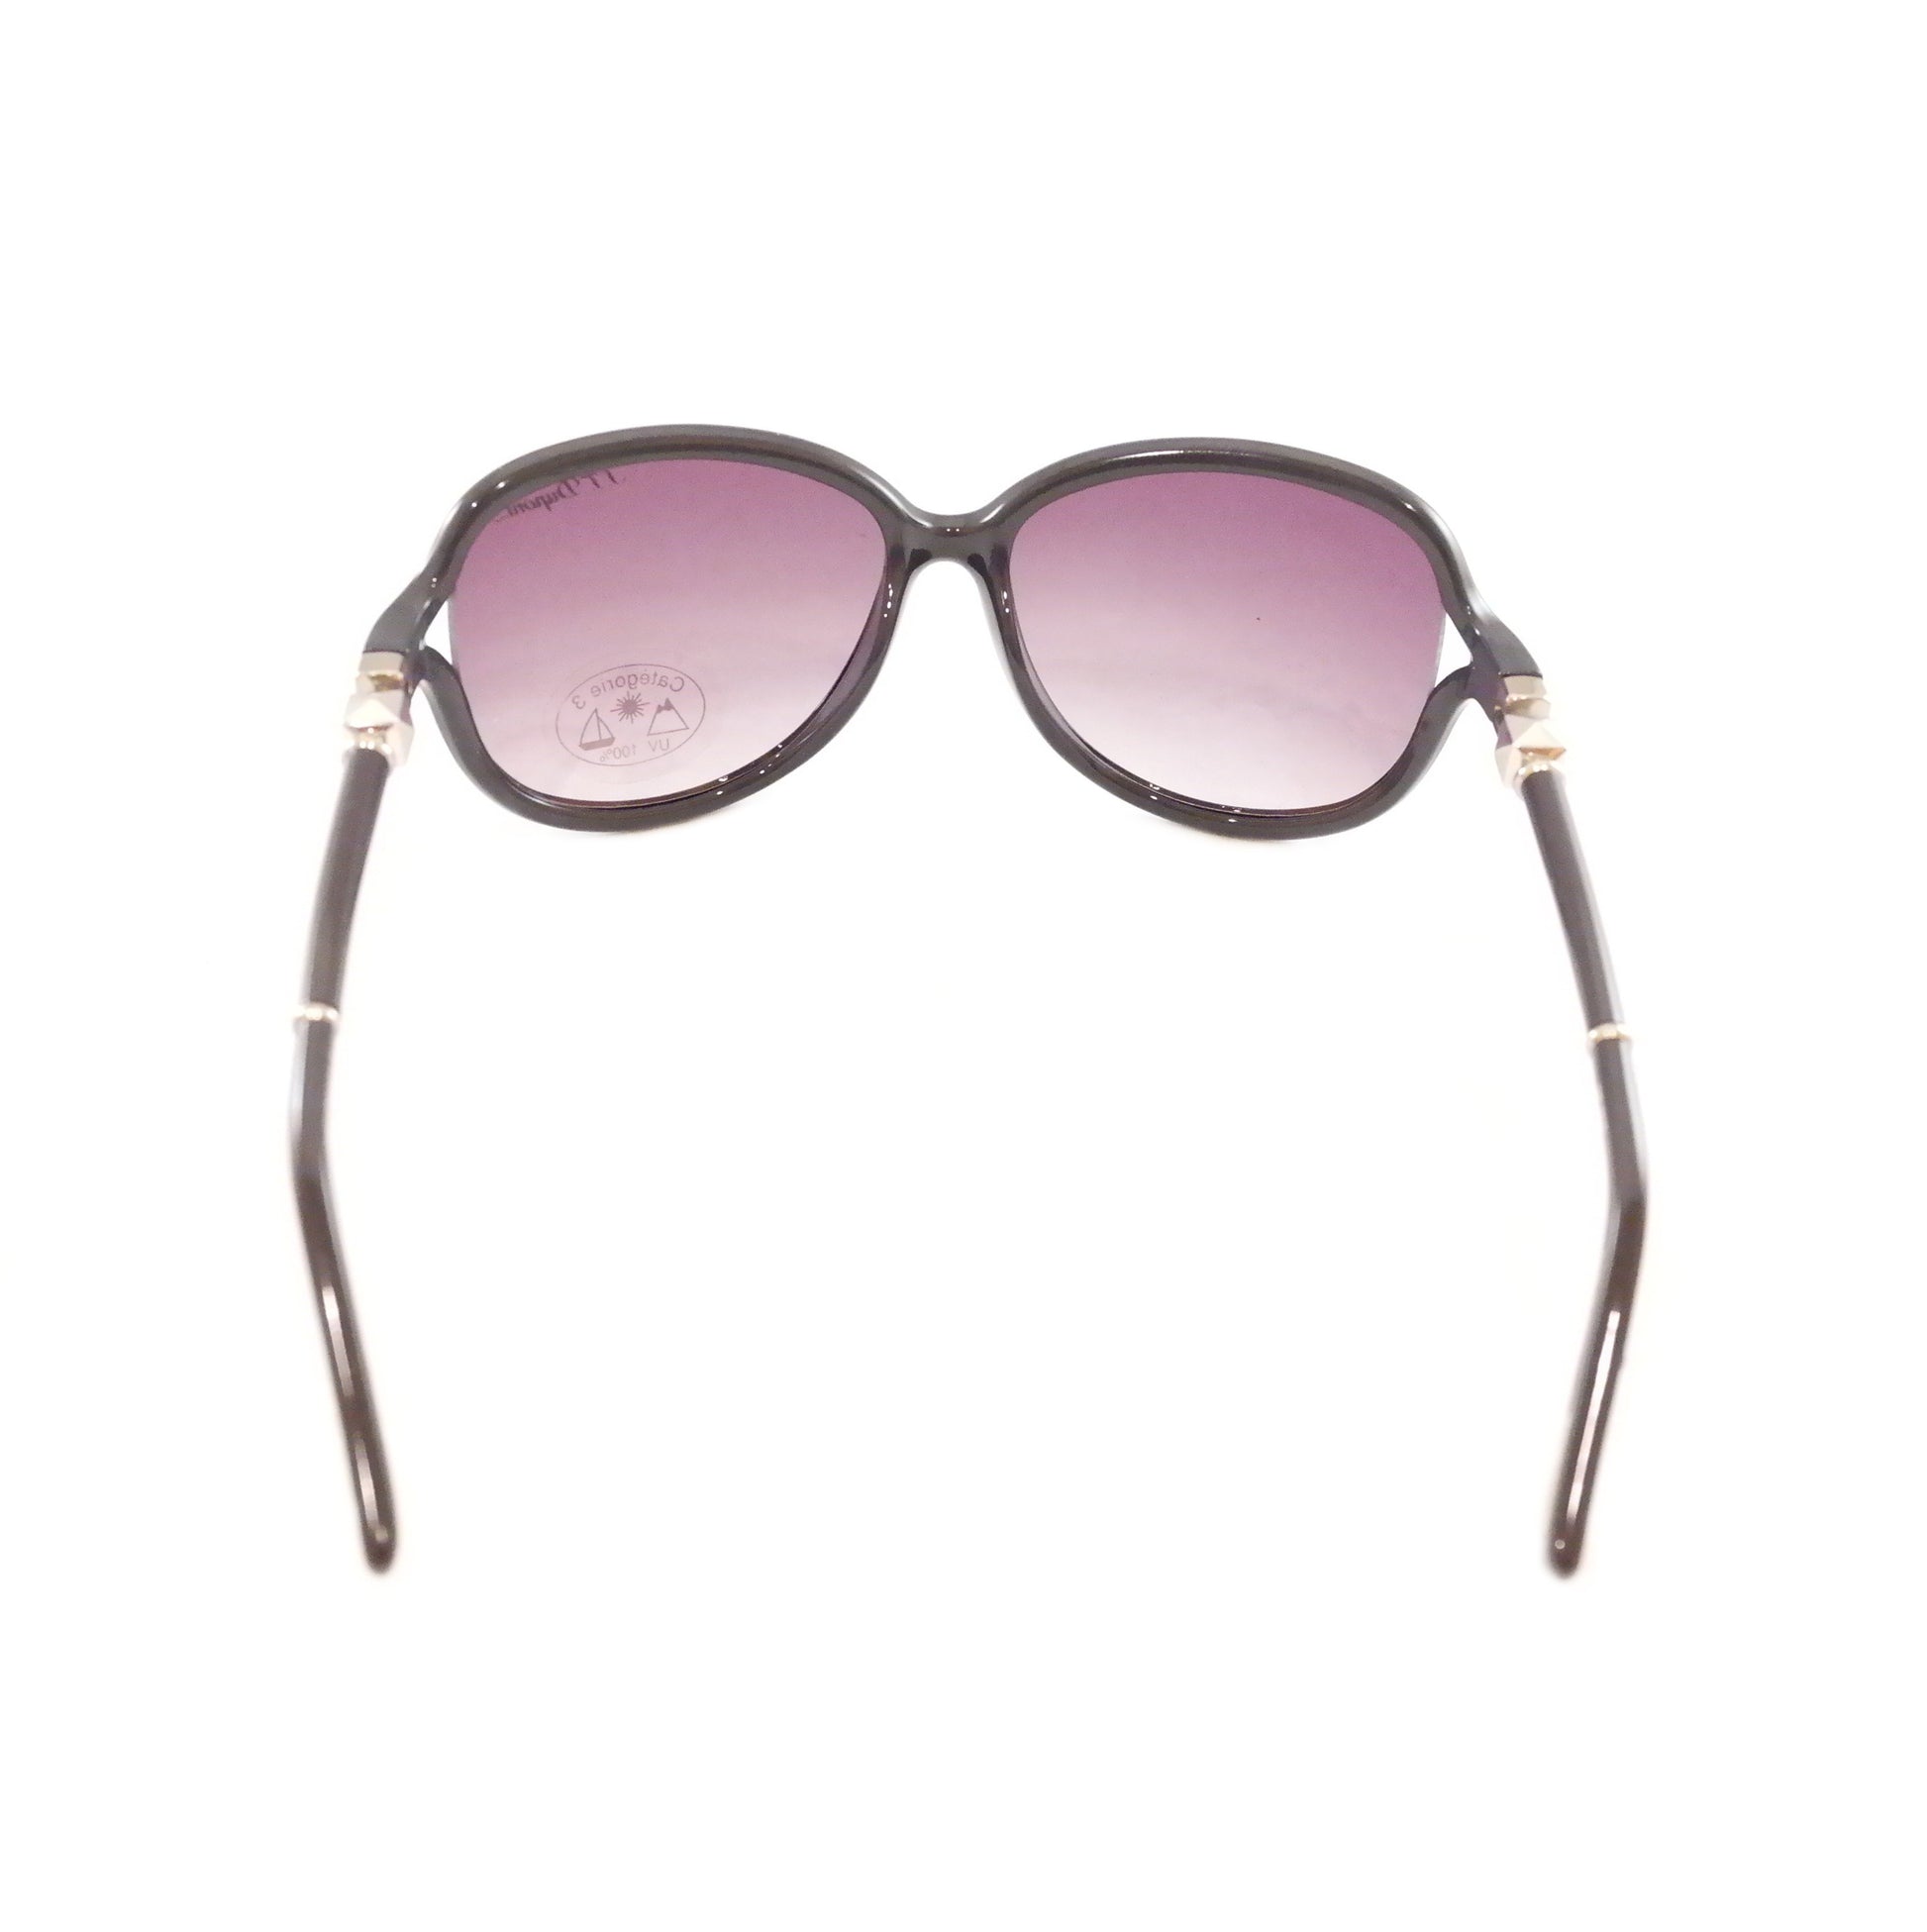 S.T. Dupont Sunglasses DP9506 Anti Reflective Plastic Japan 100% UV Cat 3 Lenses - Frame Bay